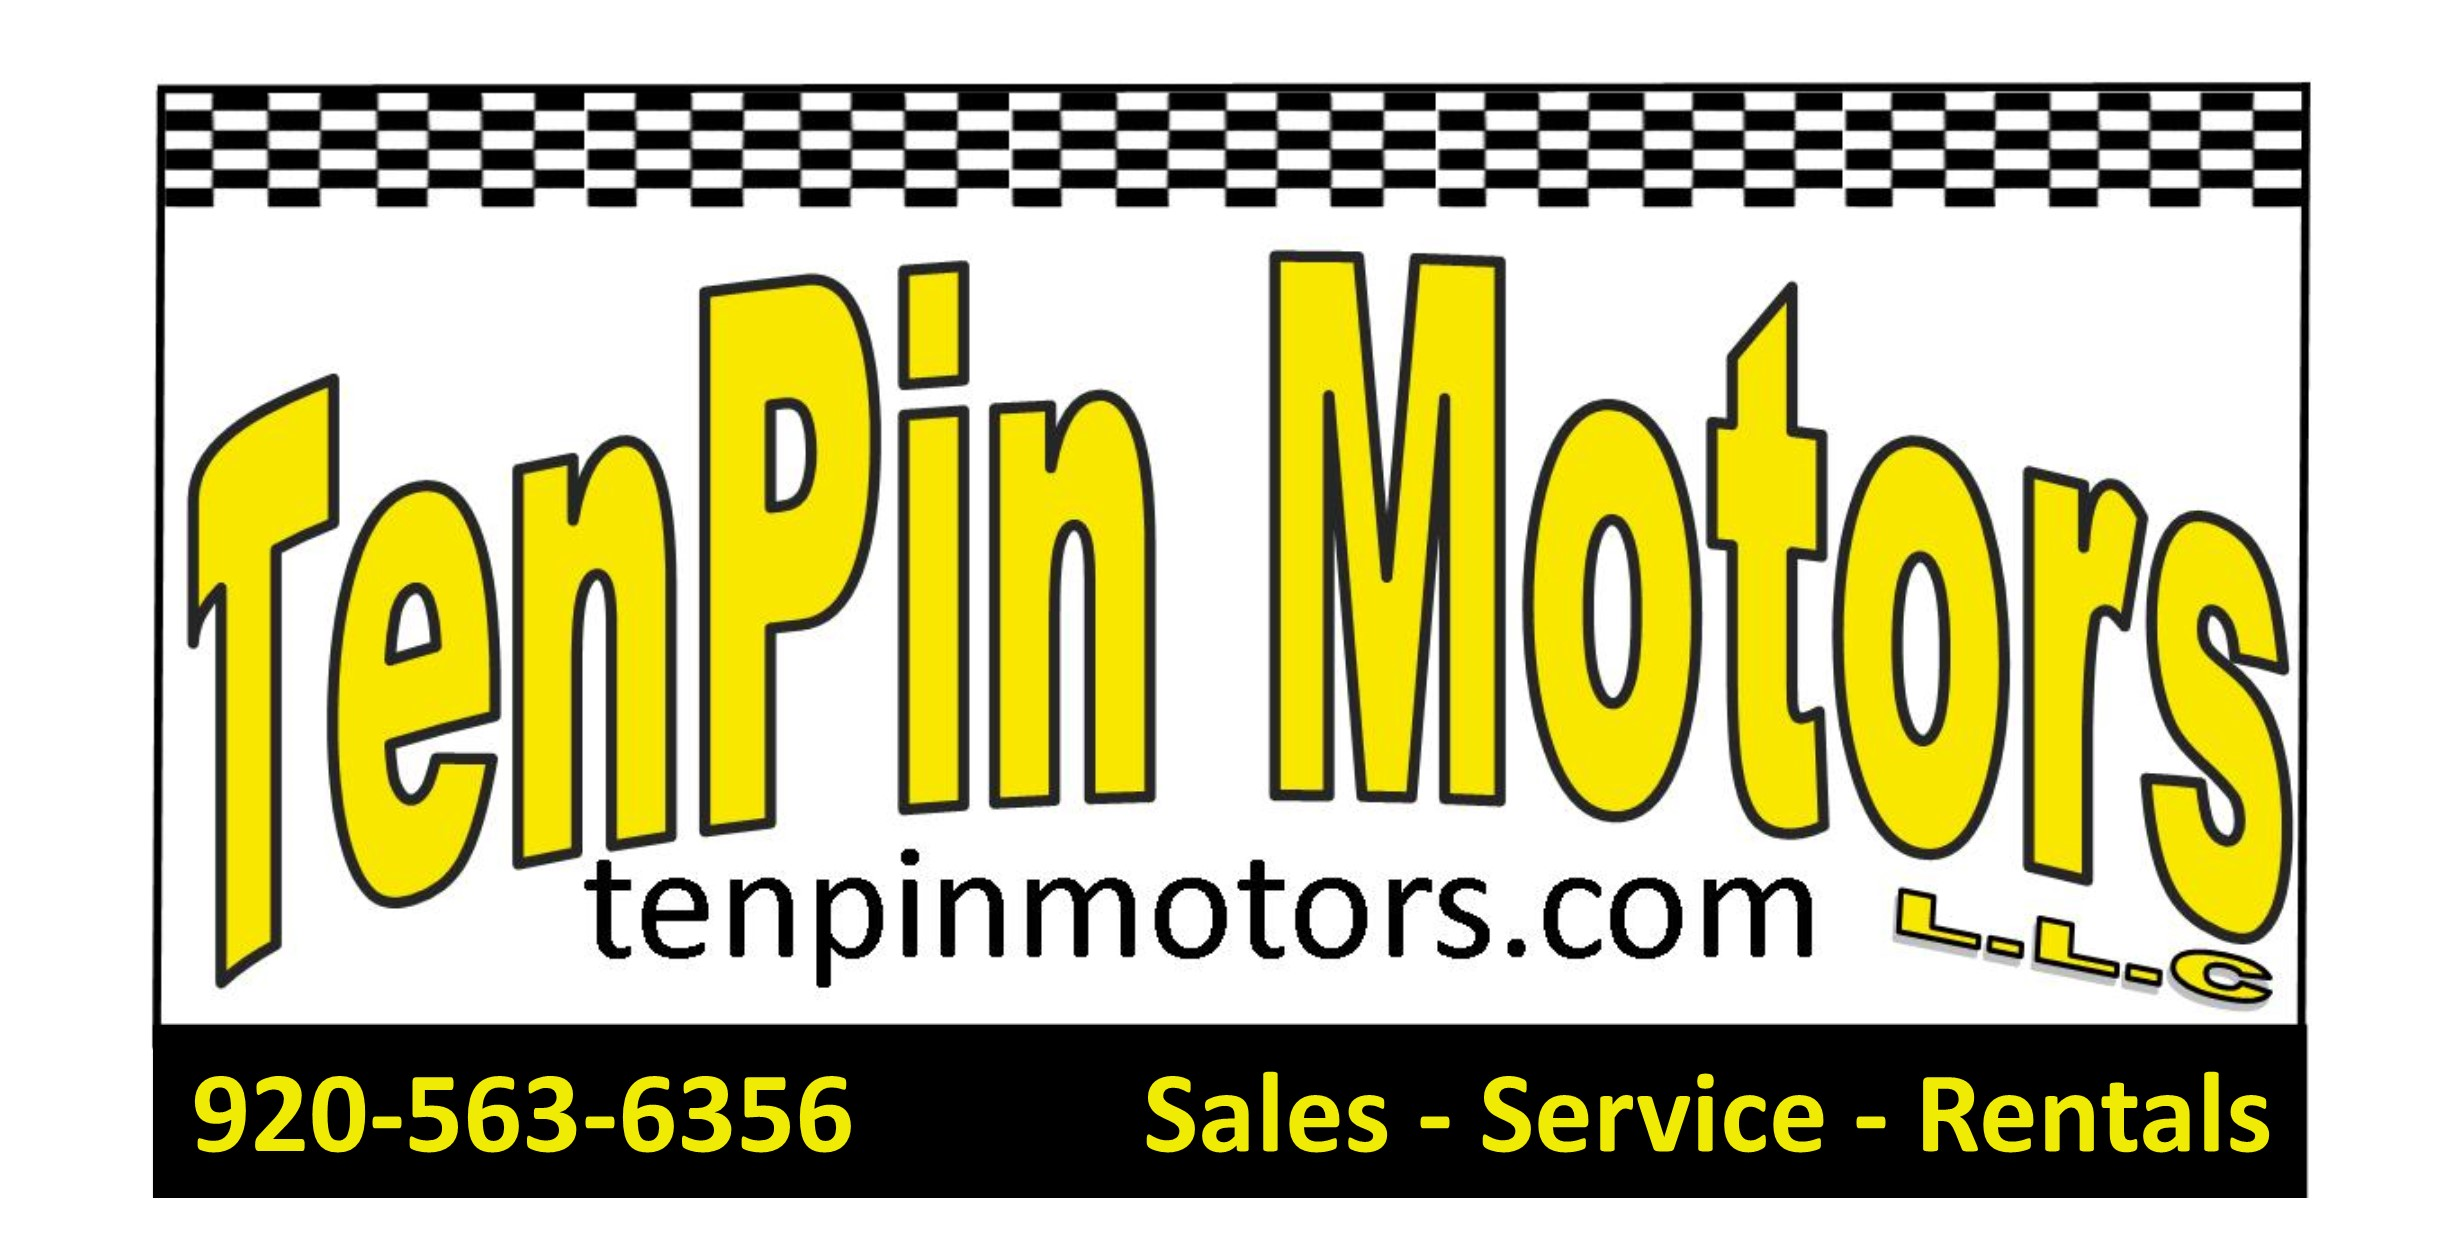 TenPin Motors